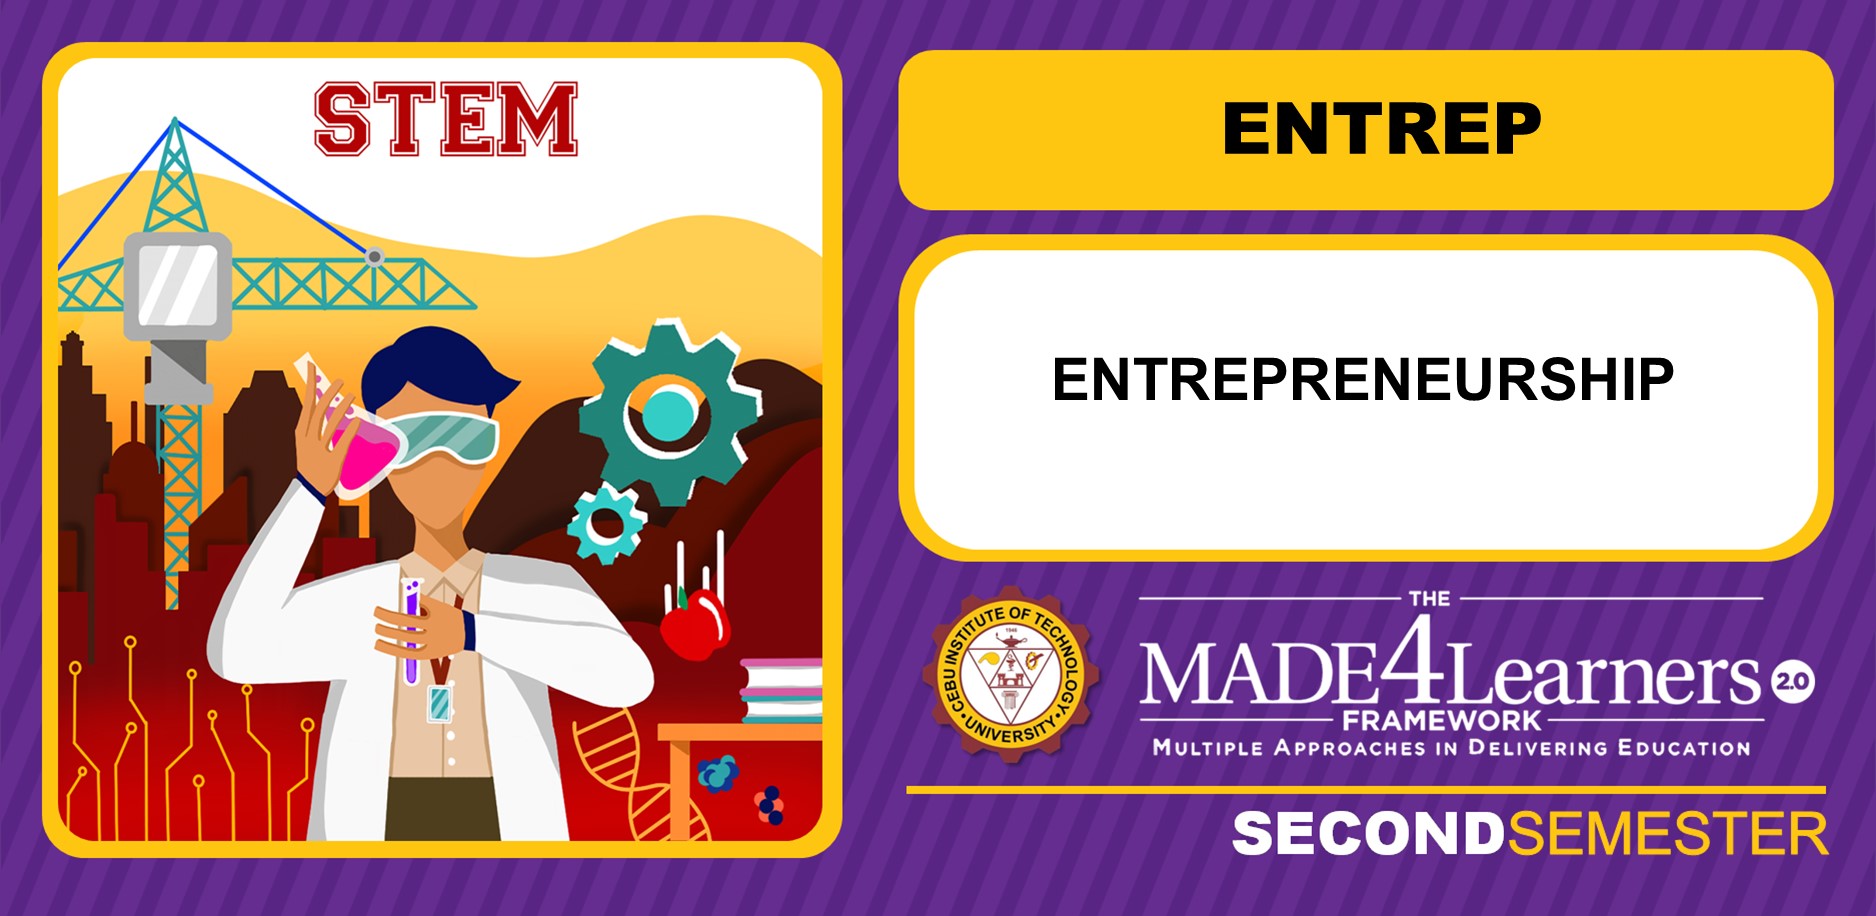 ENTREP: Entrepreneurship (Tenefrancia)-12ABCI